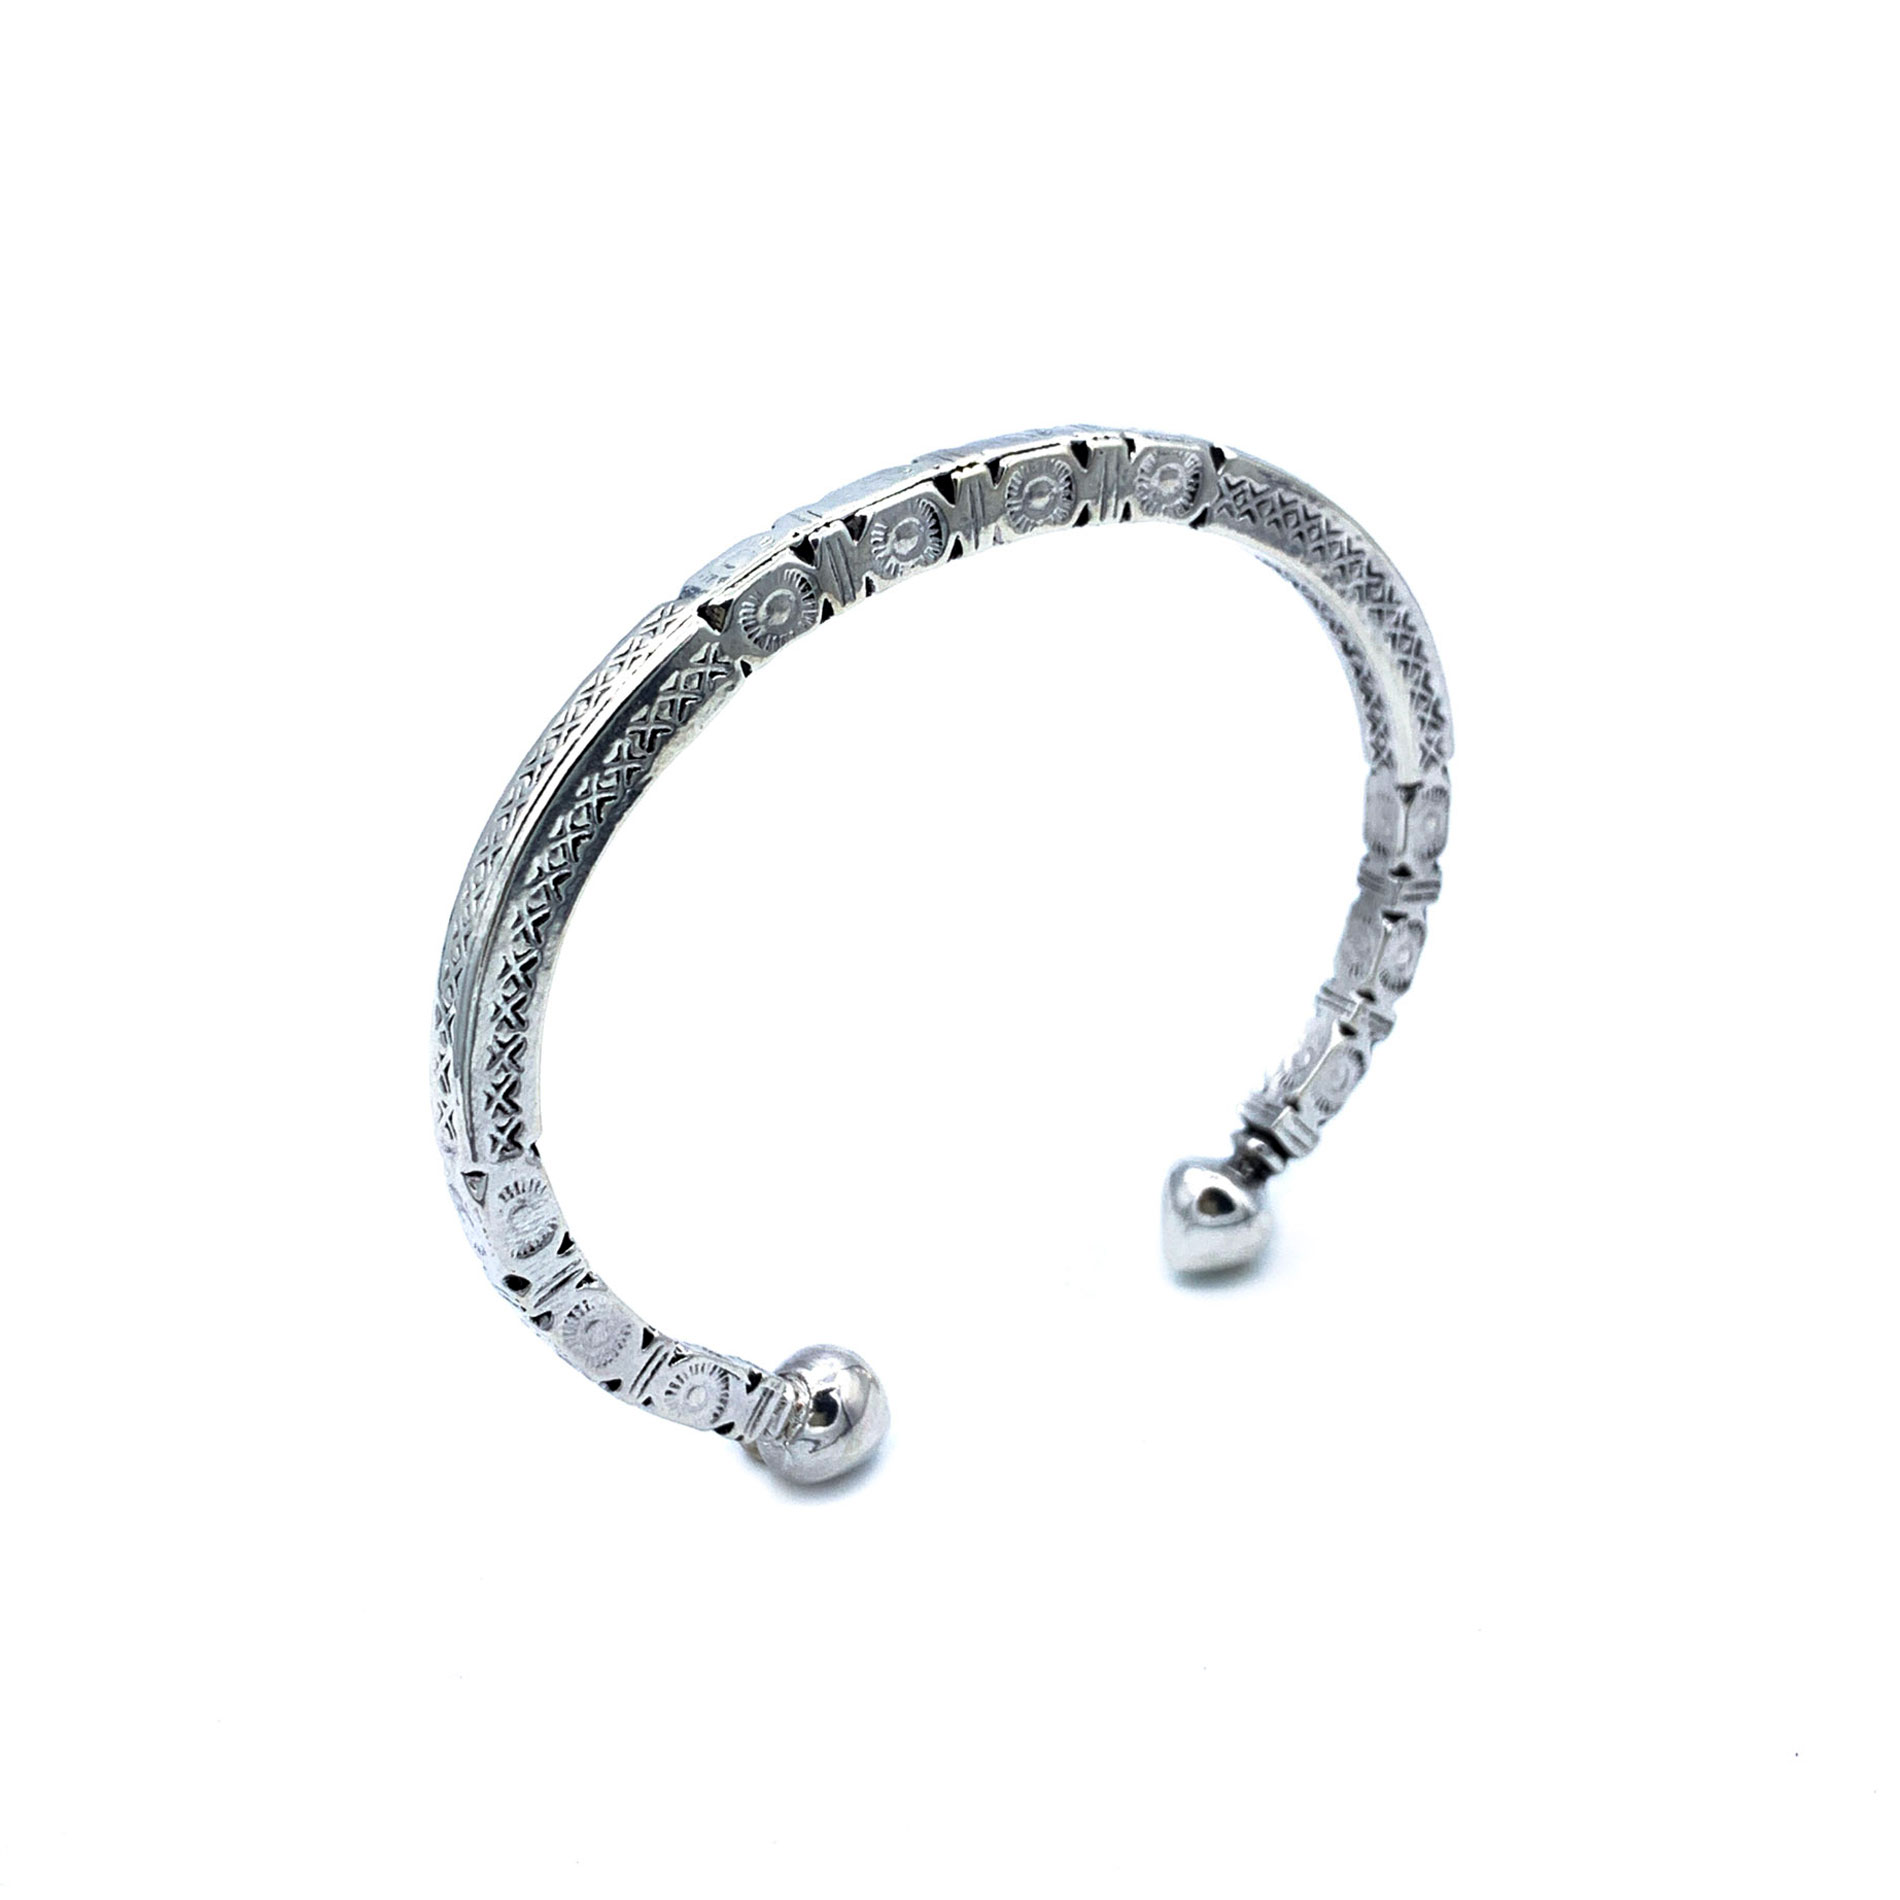 Bracelet jonc stylisé métal argenté